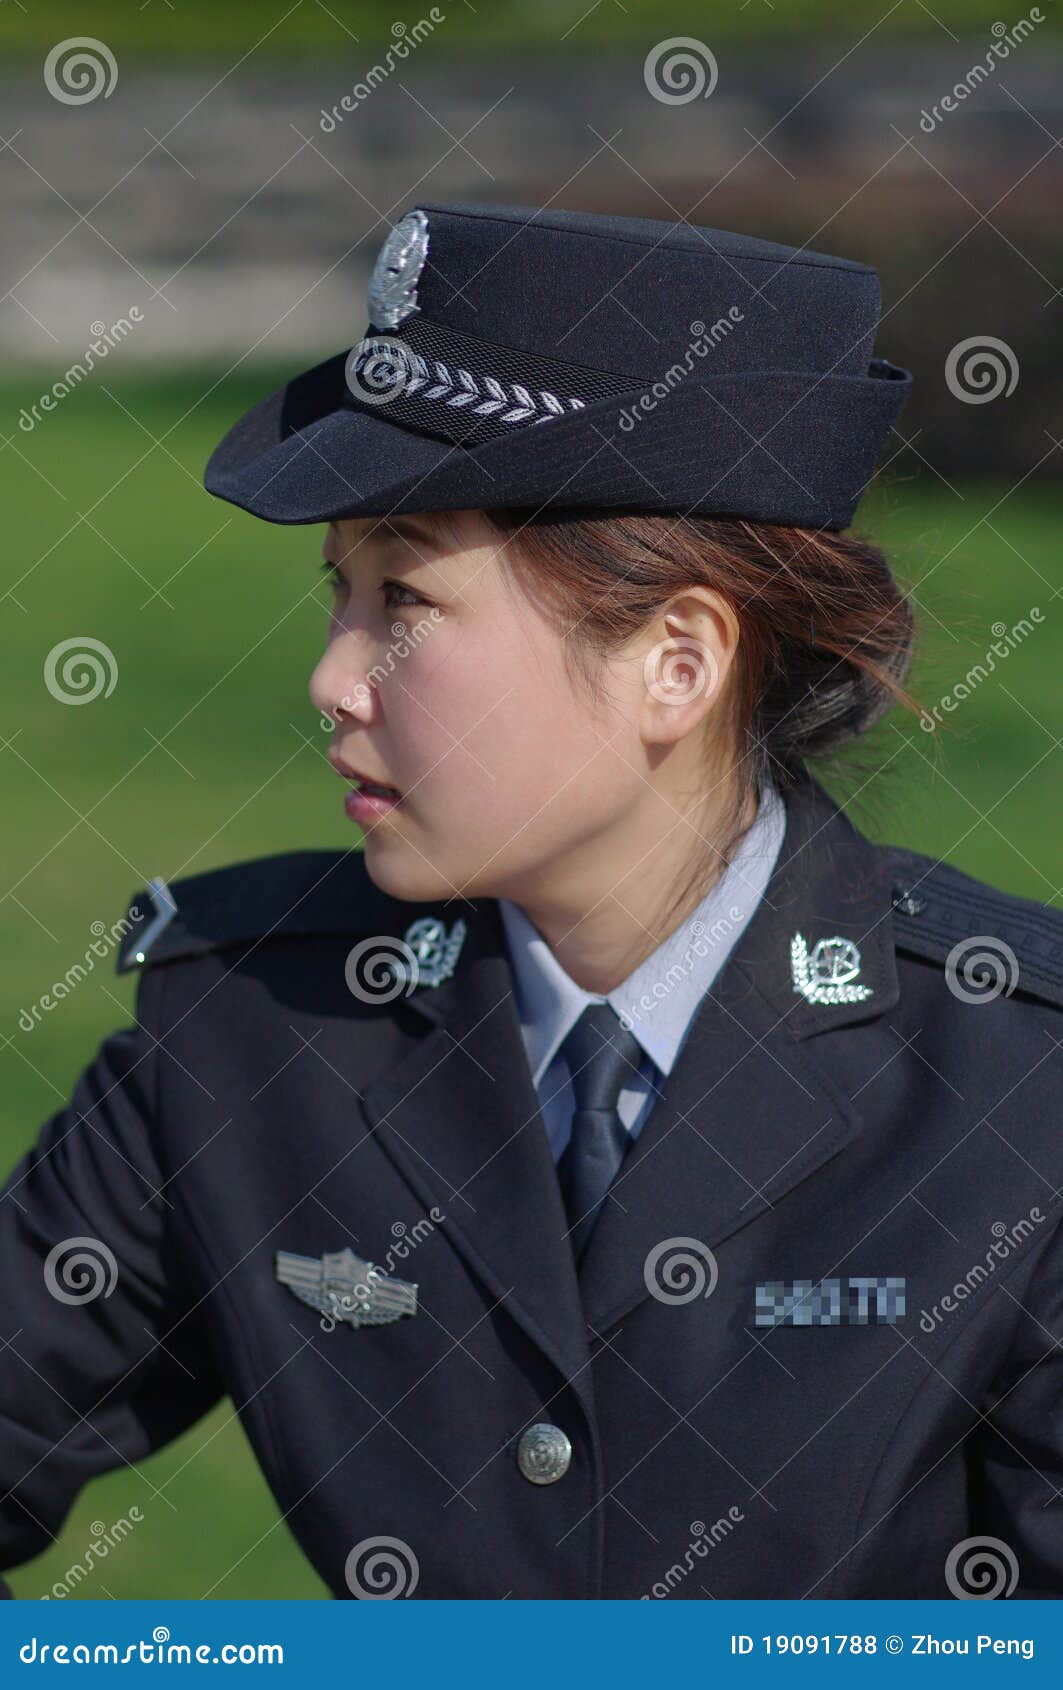 Beautiful Policewoman Royalty Free Stock Photos Image 